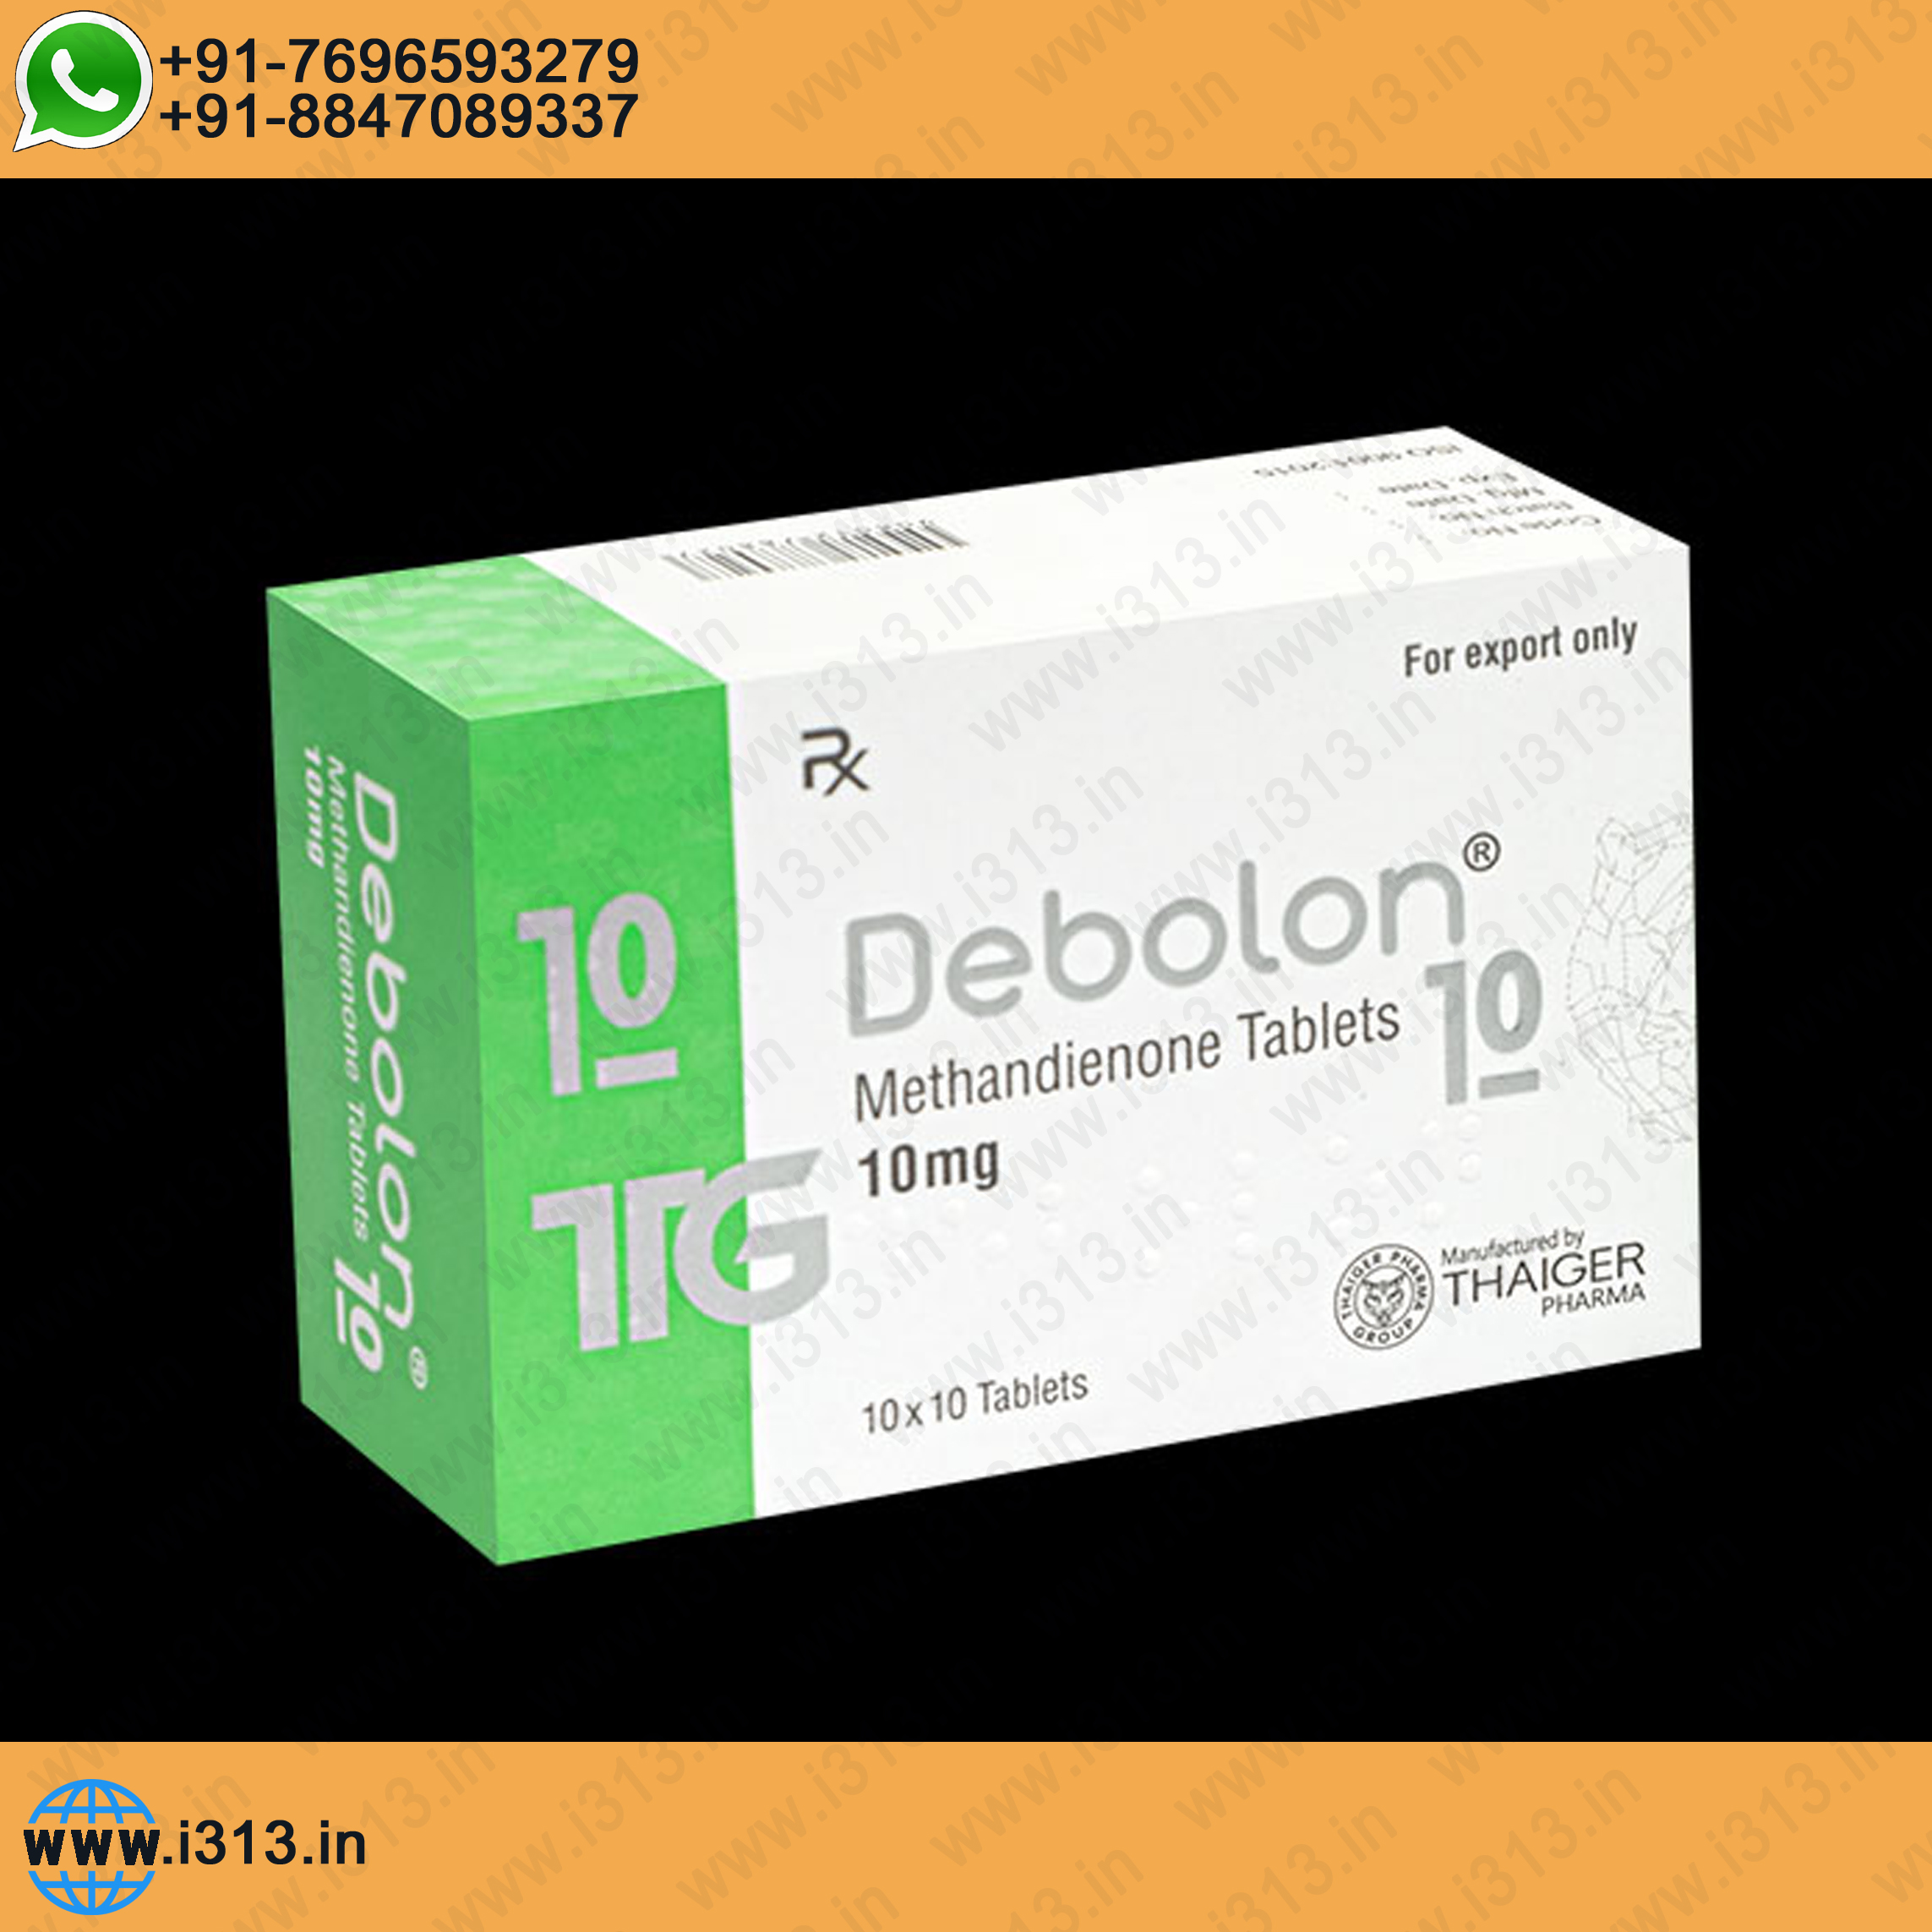 Thaiger Pharma DEBOLON